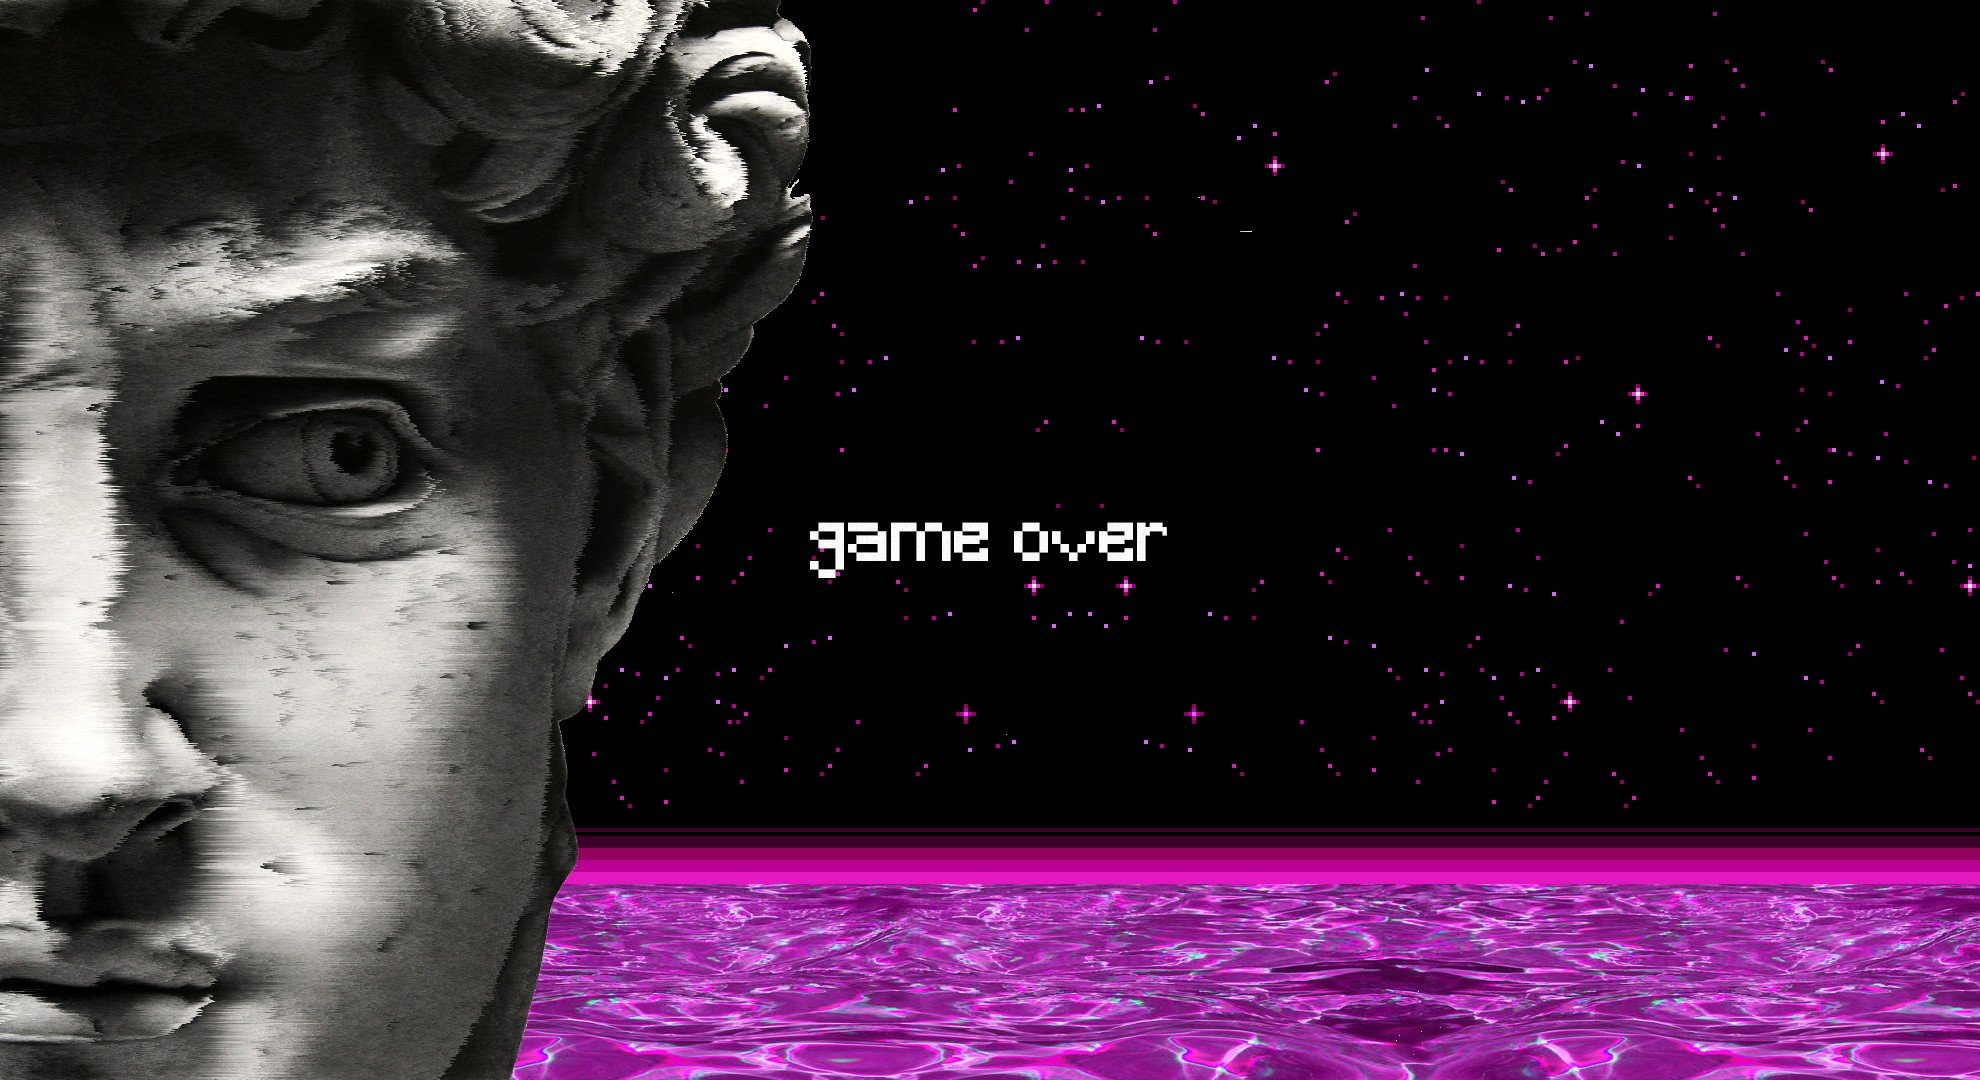 vaporwave Statue Water Spaceship GAME  OVER  Pixel art 